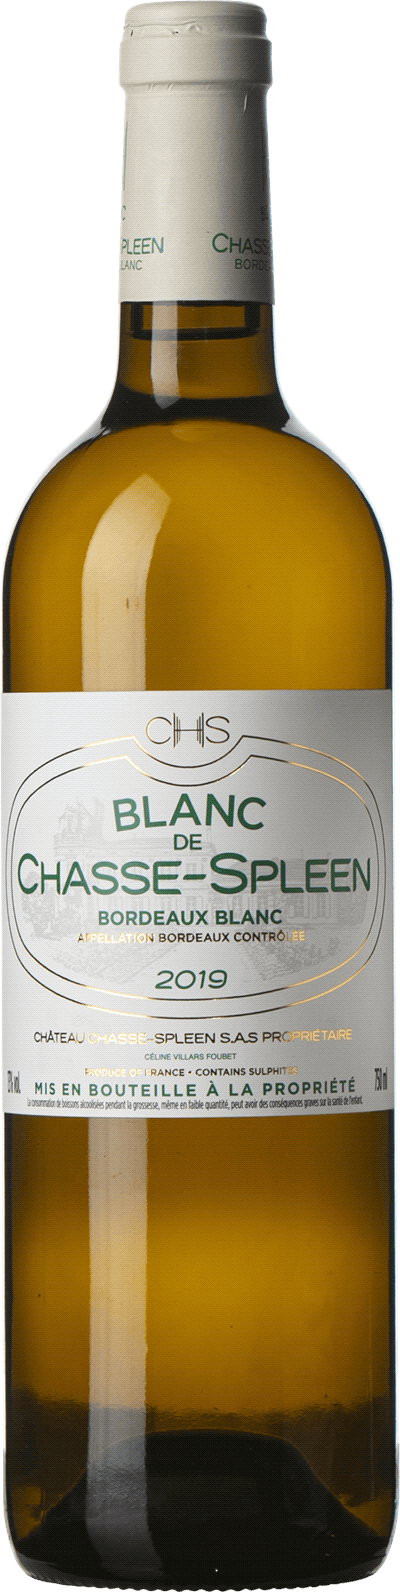 Produktbild för Château Chasse-Spleen